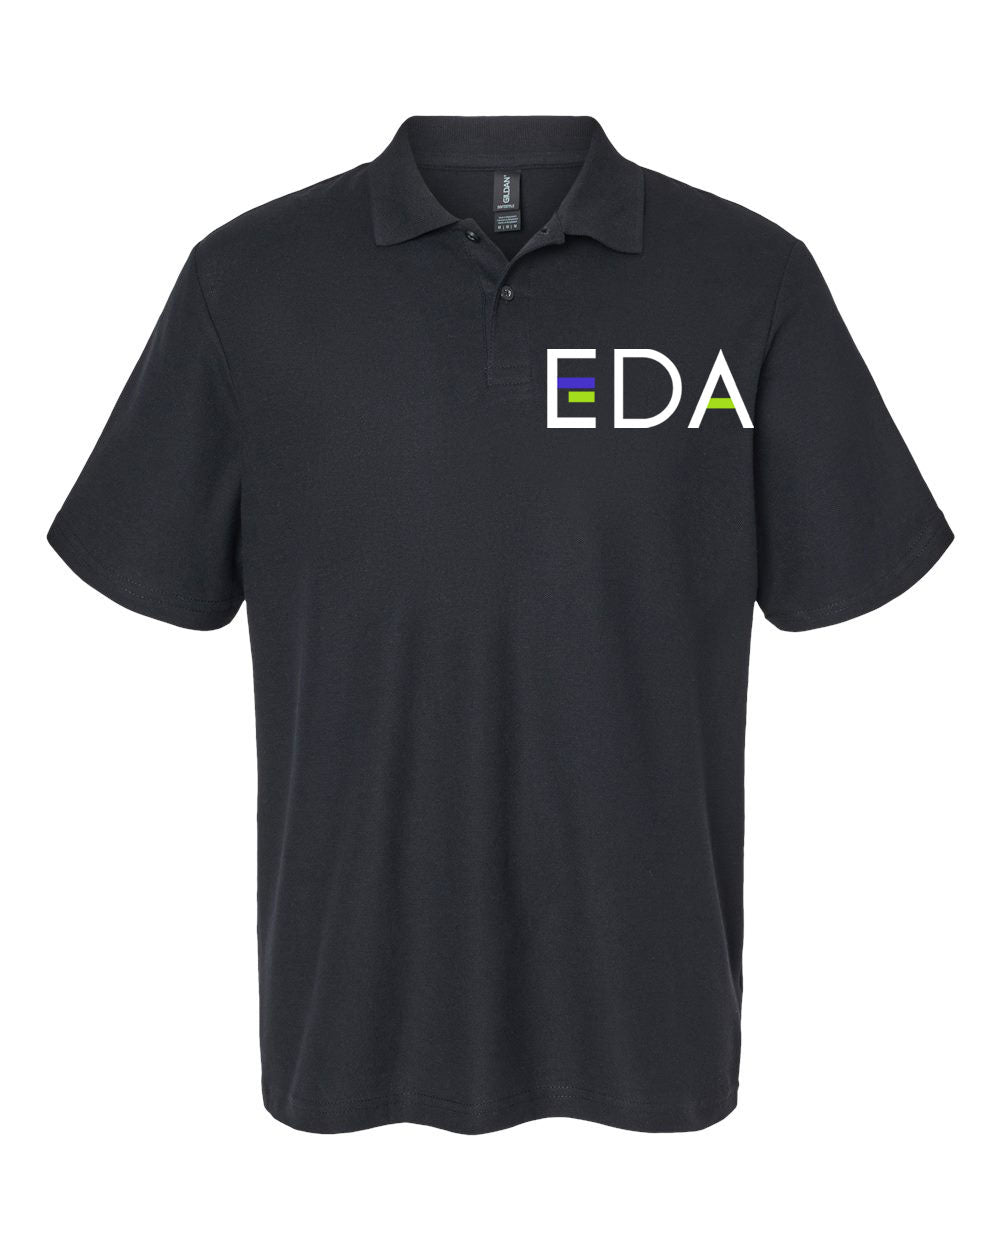 Evolution Dance Arts Design 4 Polo T-Shirt